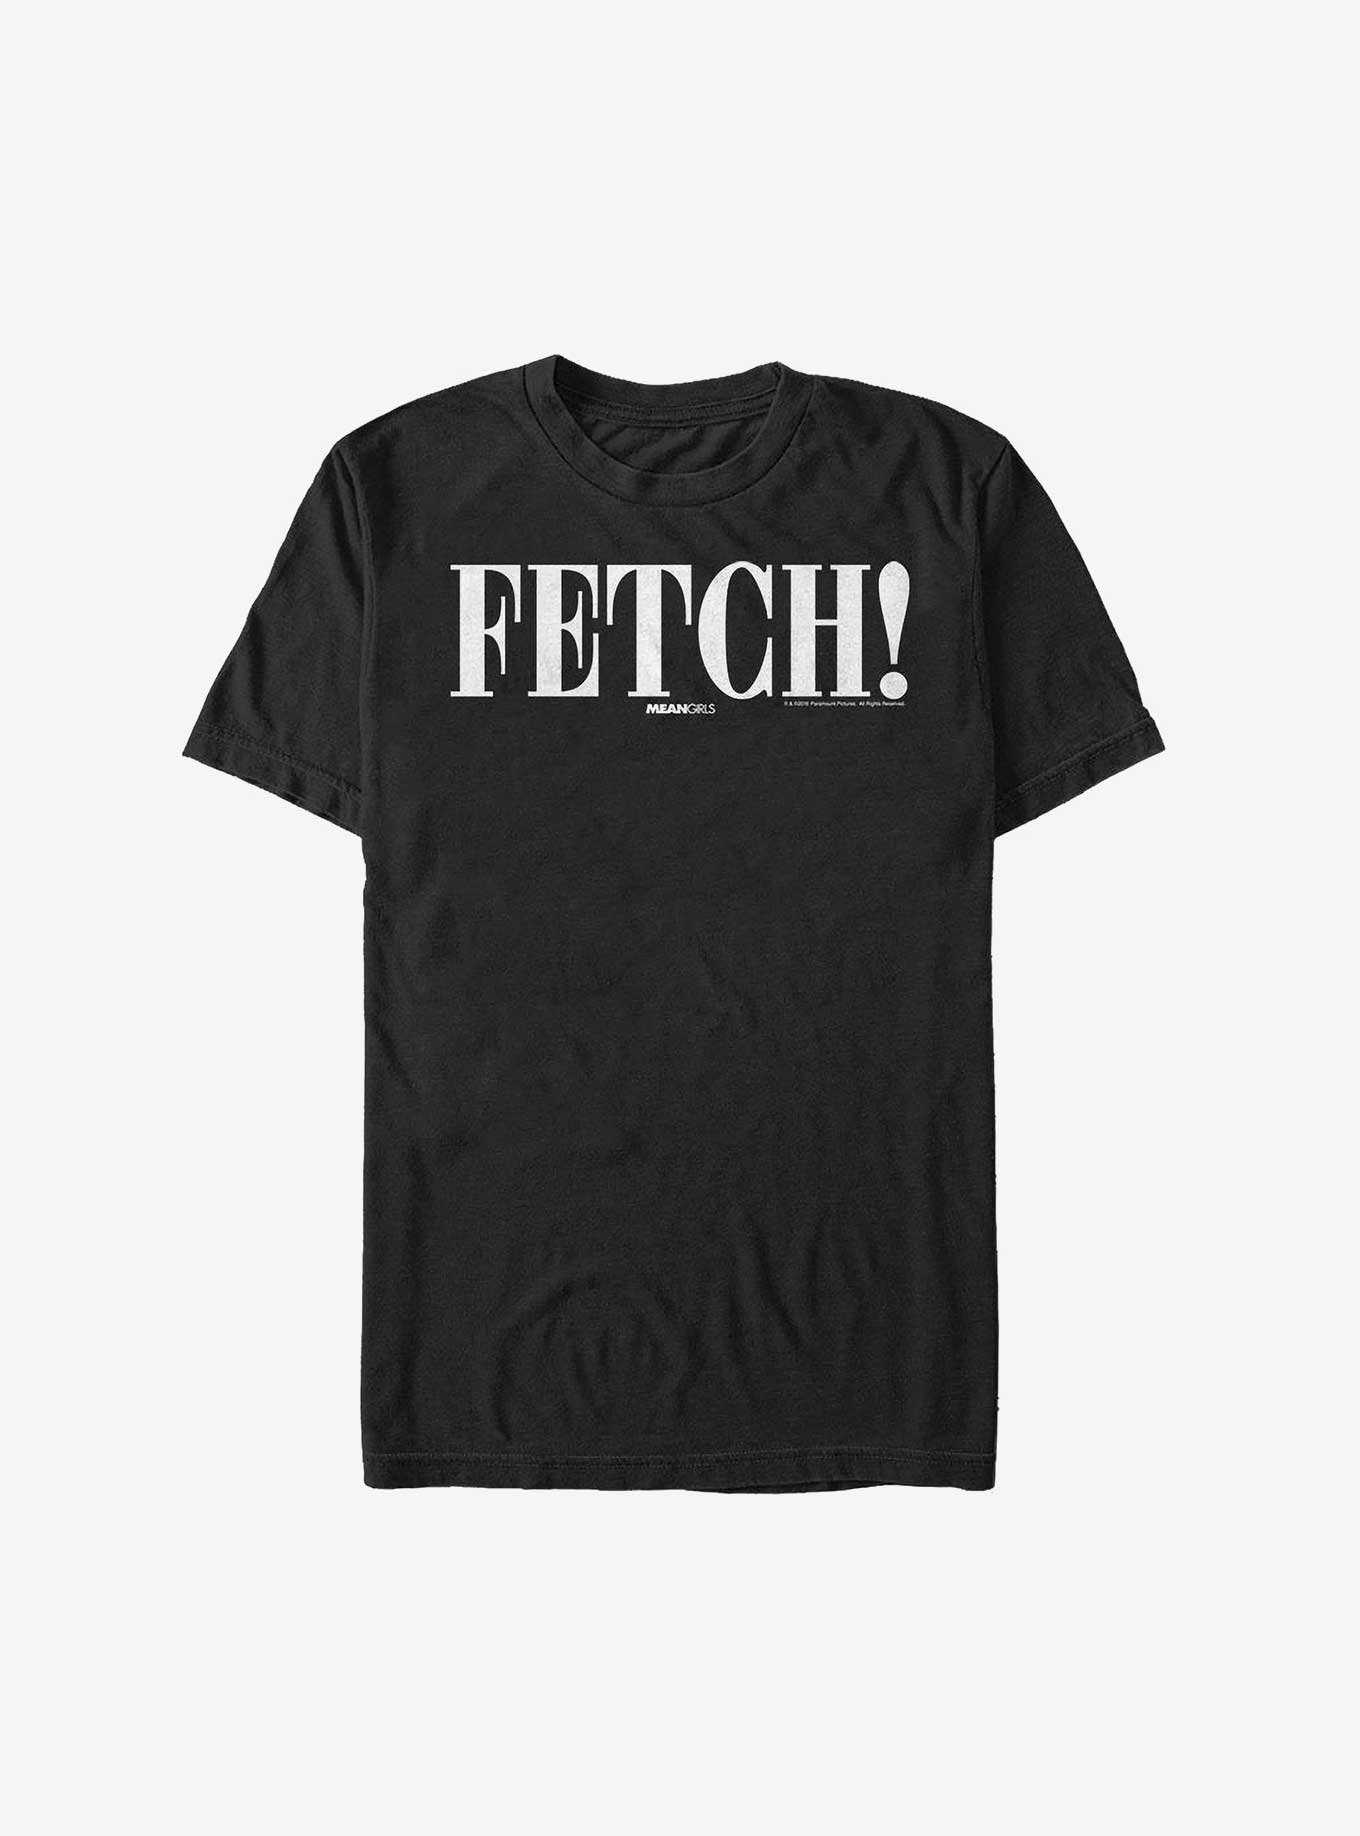 Mean Girls Fetch T-Shirt, , hi-res